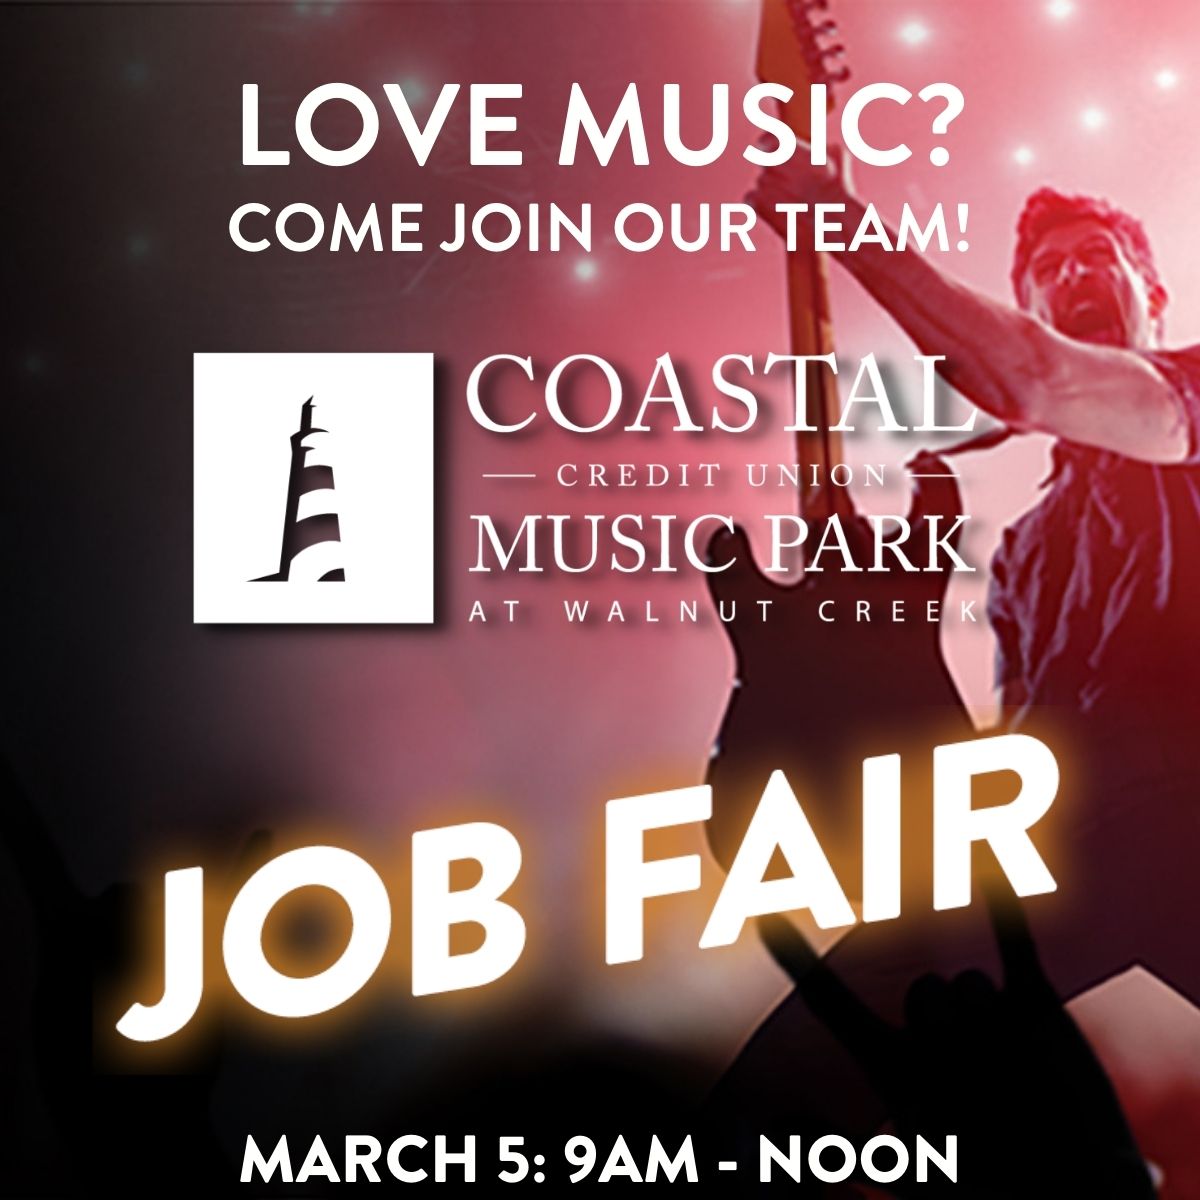 Job Fair at Coastal Credit Union Music Park